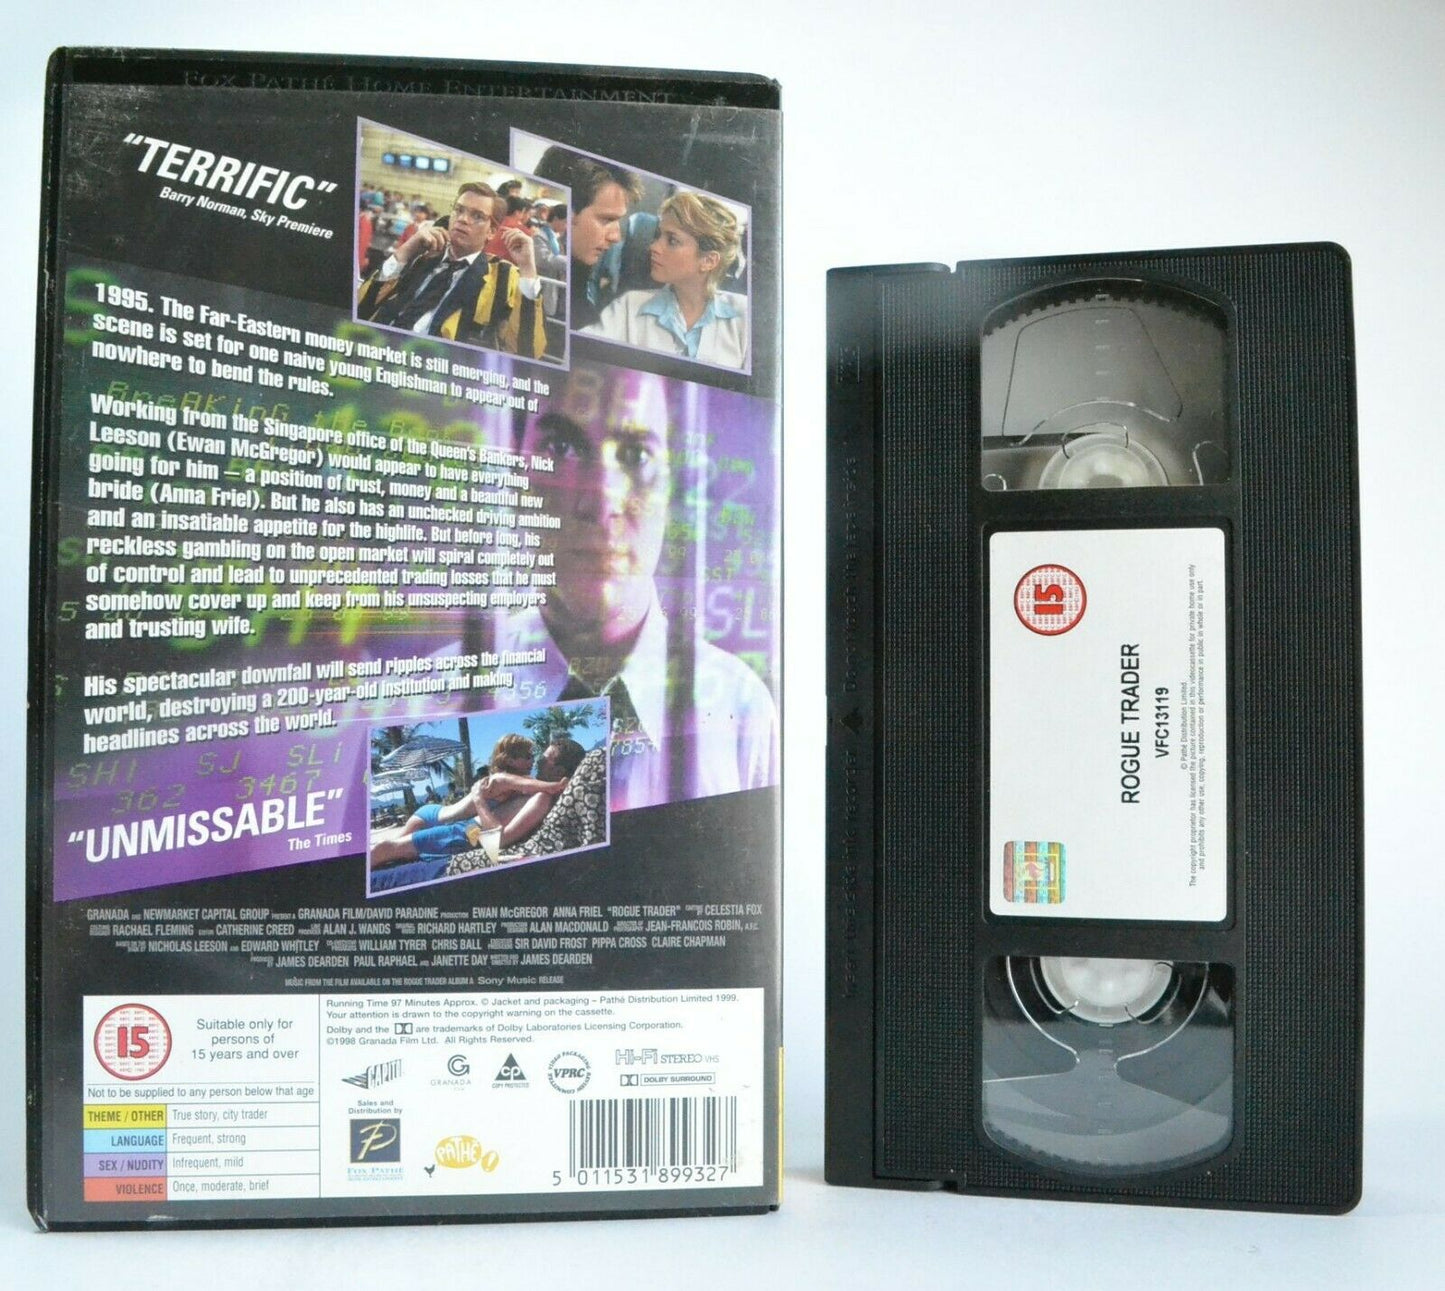 Rogue Trader: Story Of Nick Leeson - Large Box - Drama - Ewan McGregor - Pal VHS-